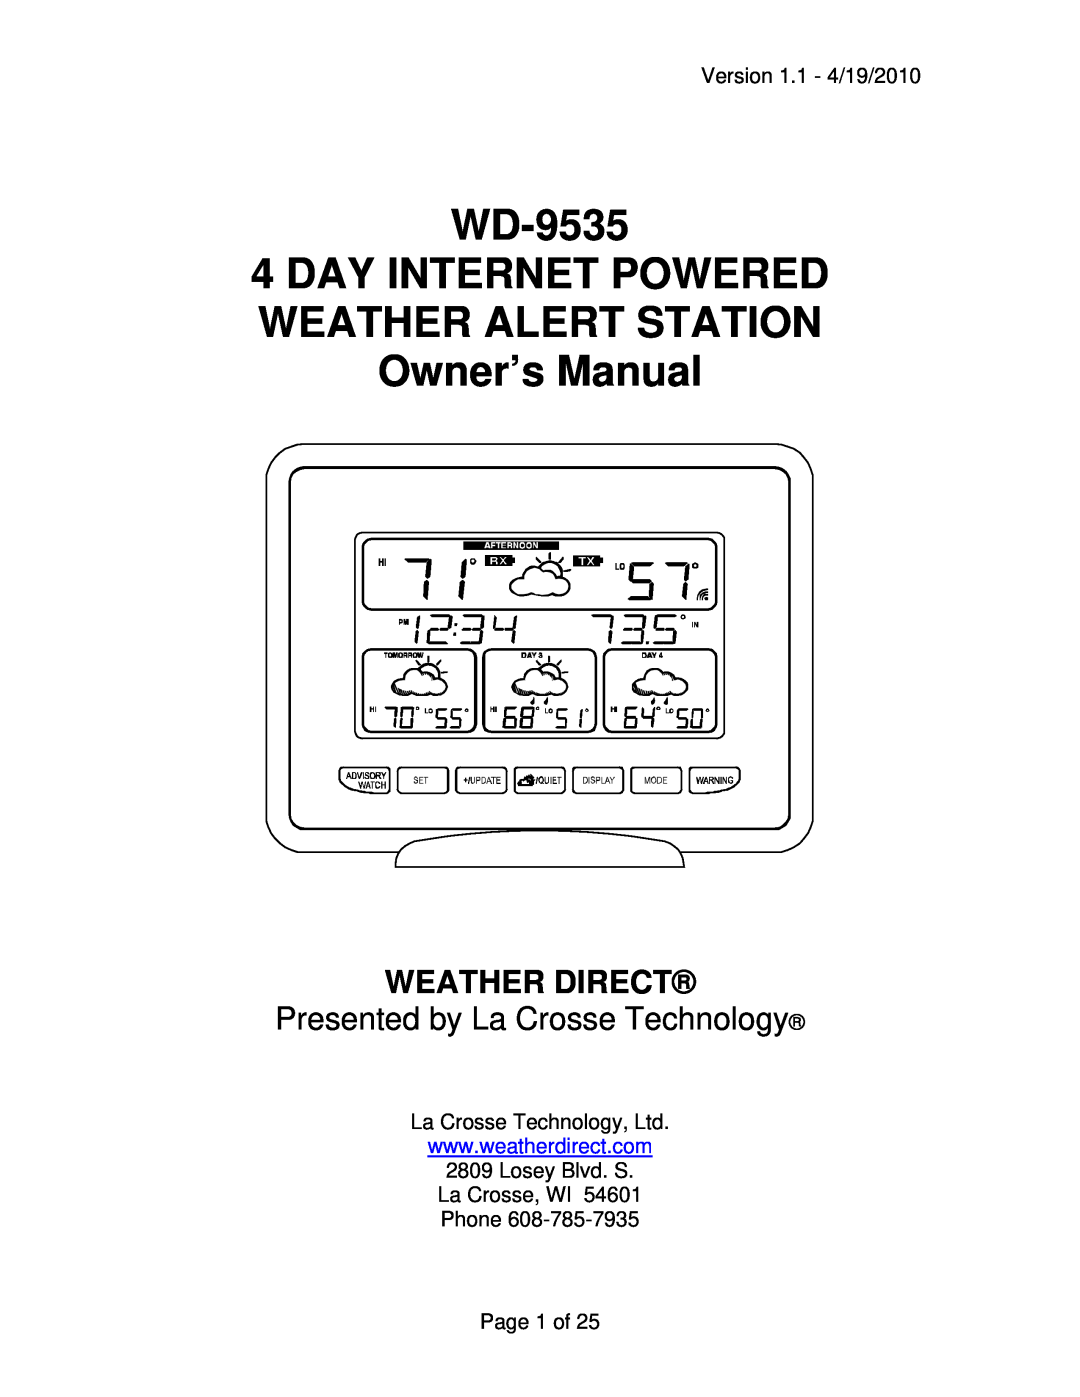 La Crosse Technology WD-9535 owner manual Weather Direct, Presented by La Crosse Technology 